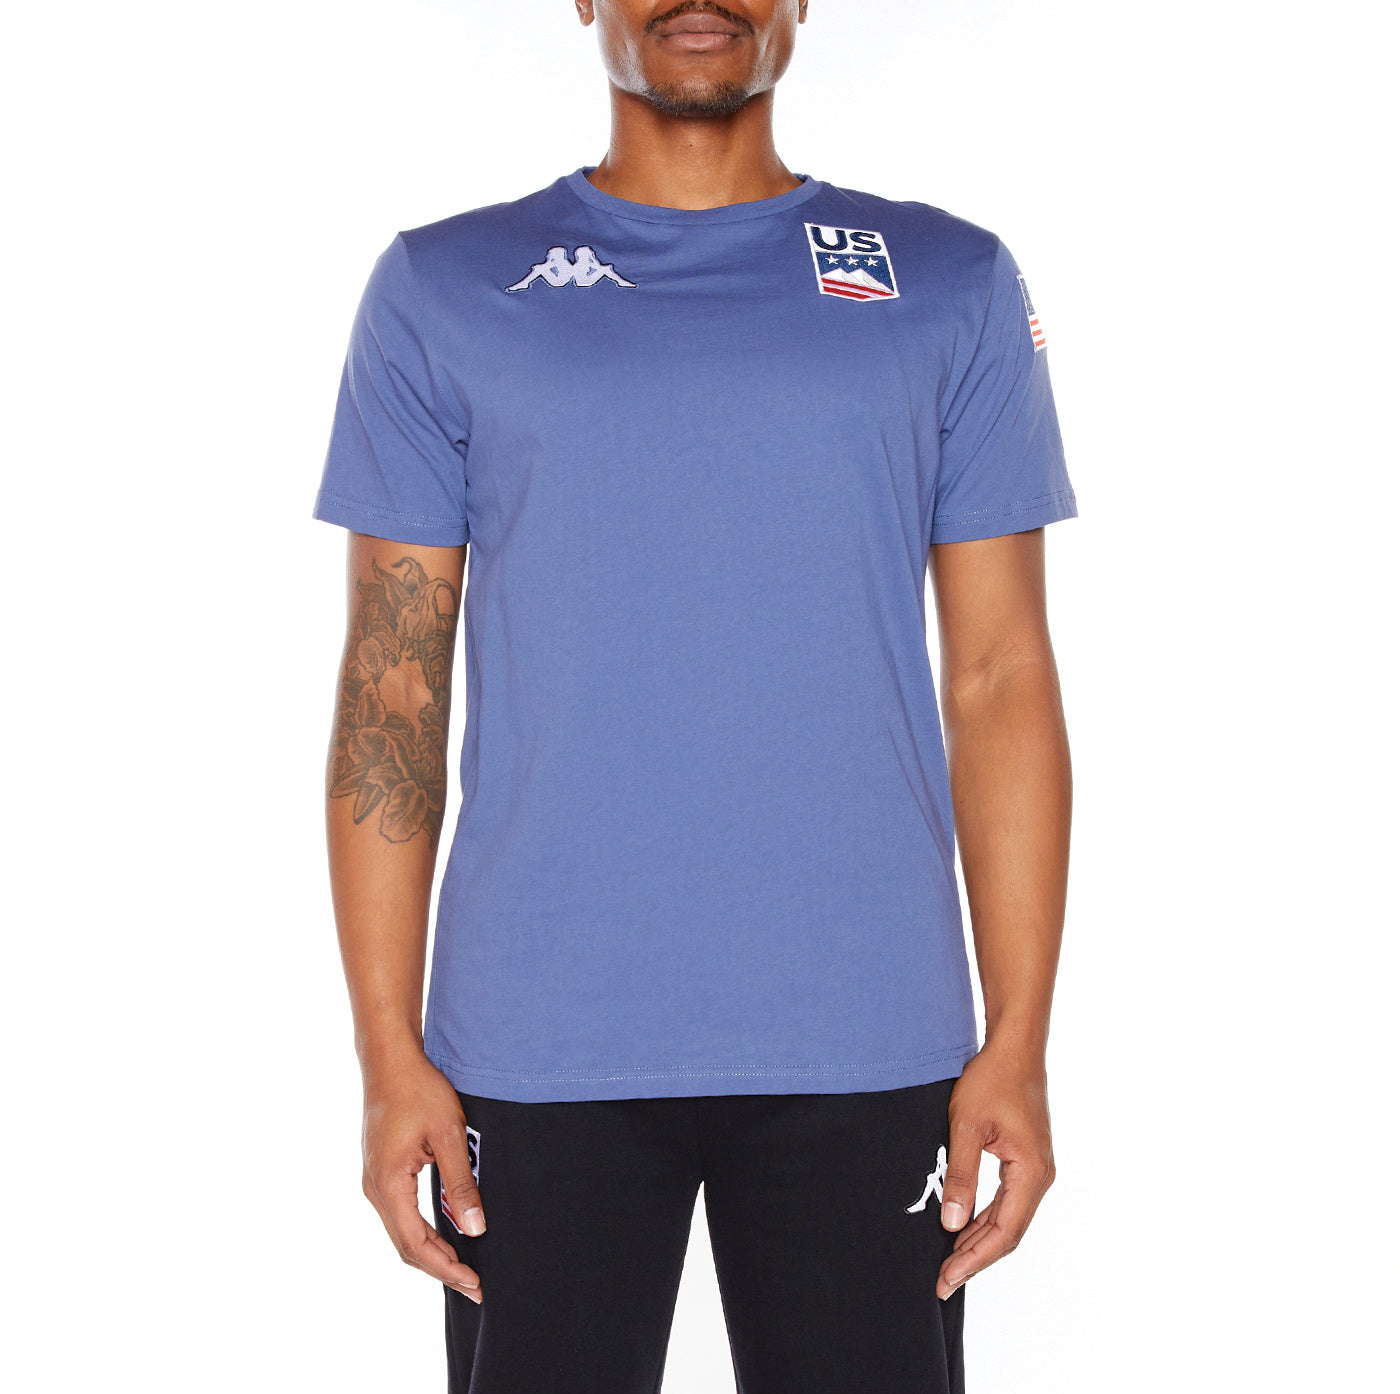 Kappa – US - Navy Estessi T-Shirt USA